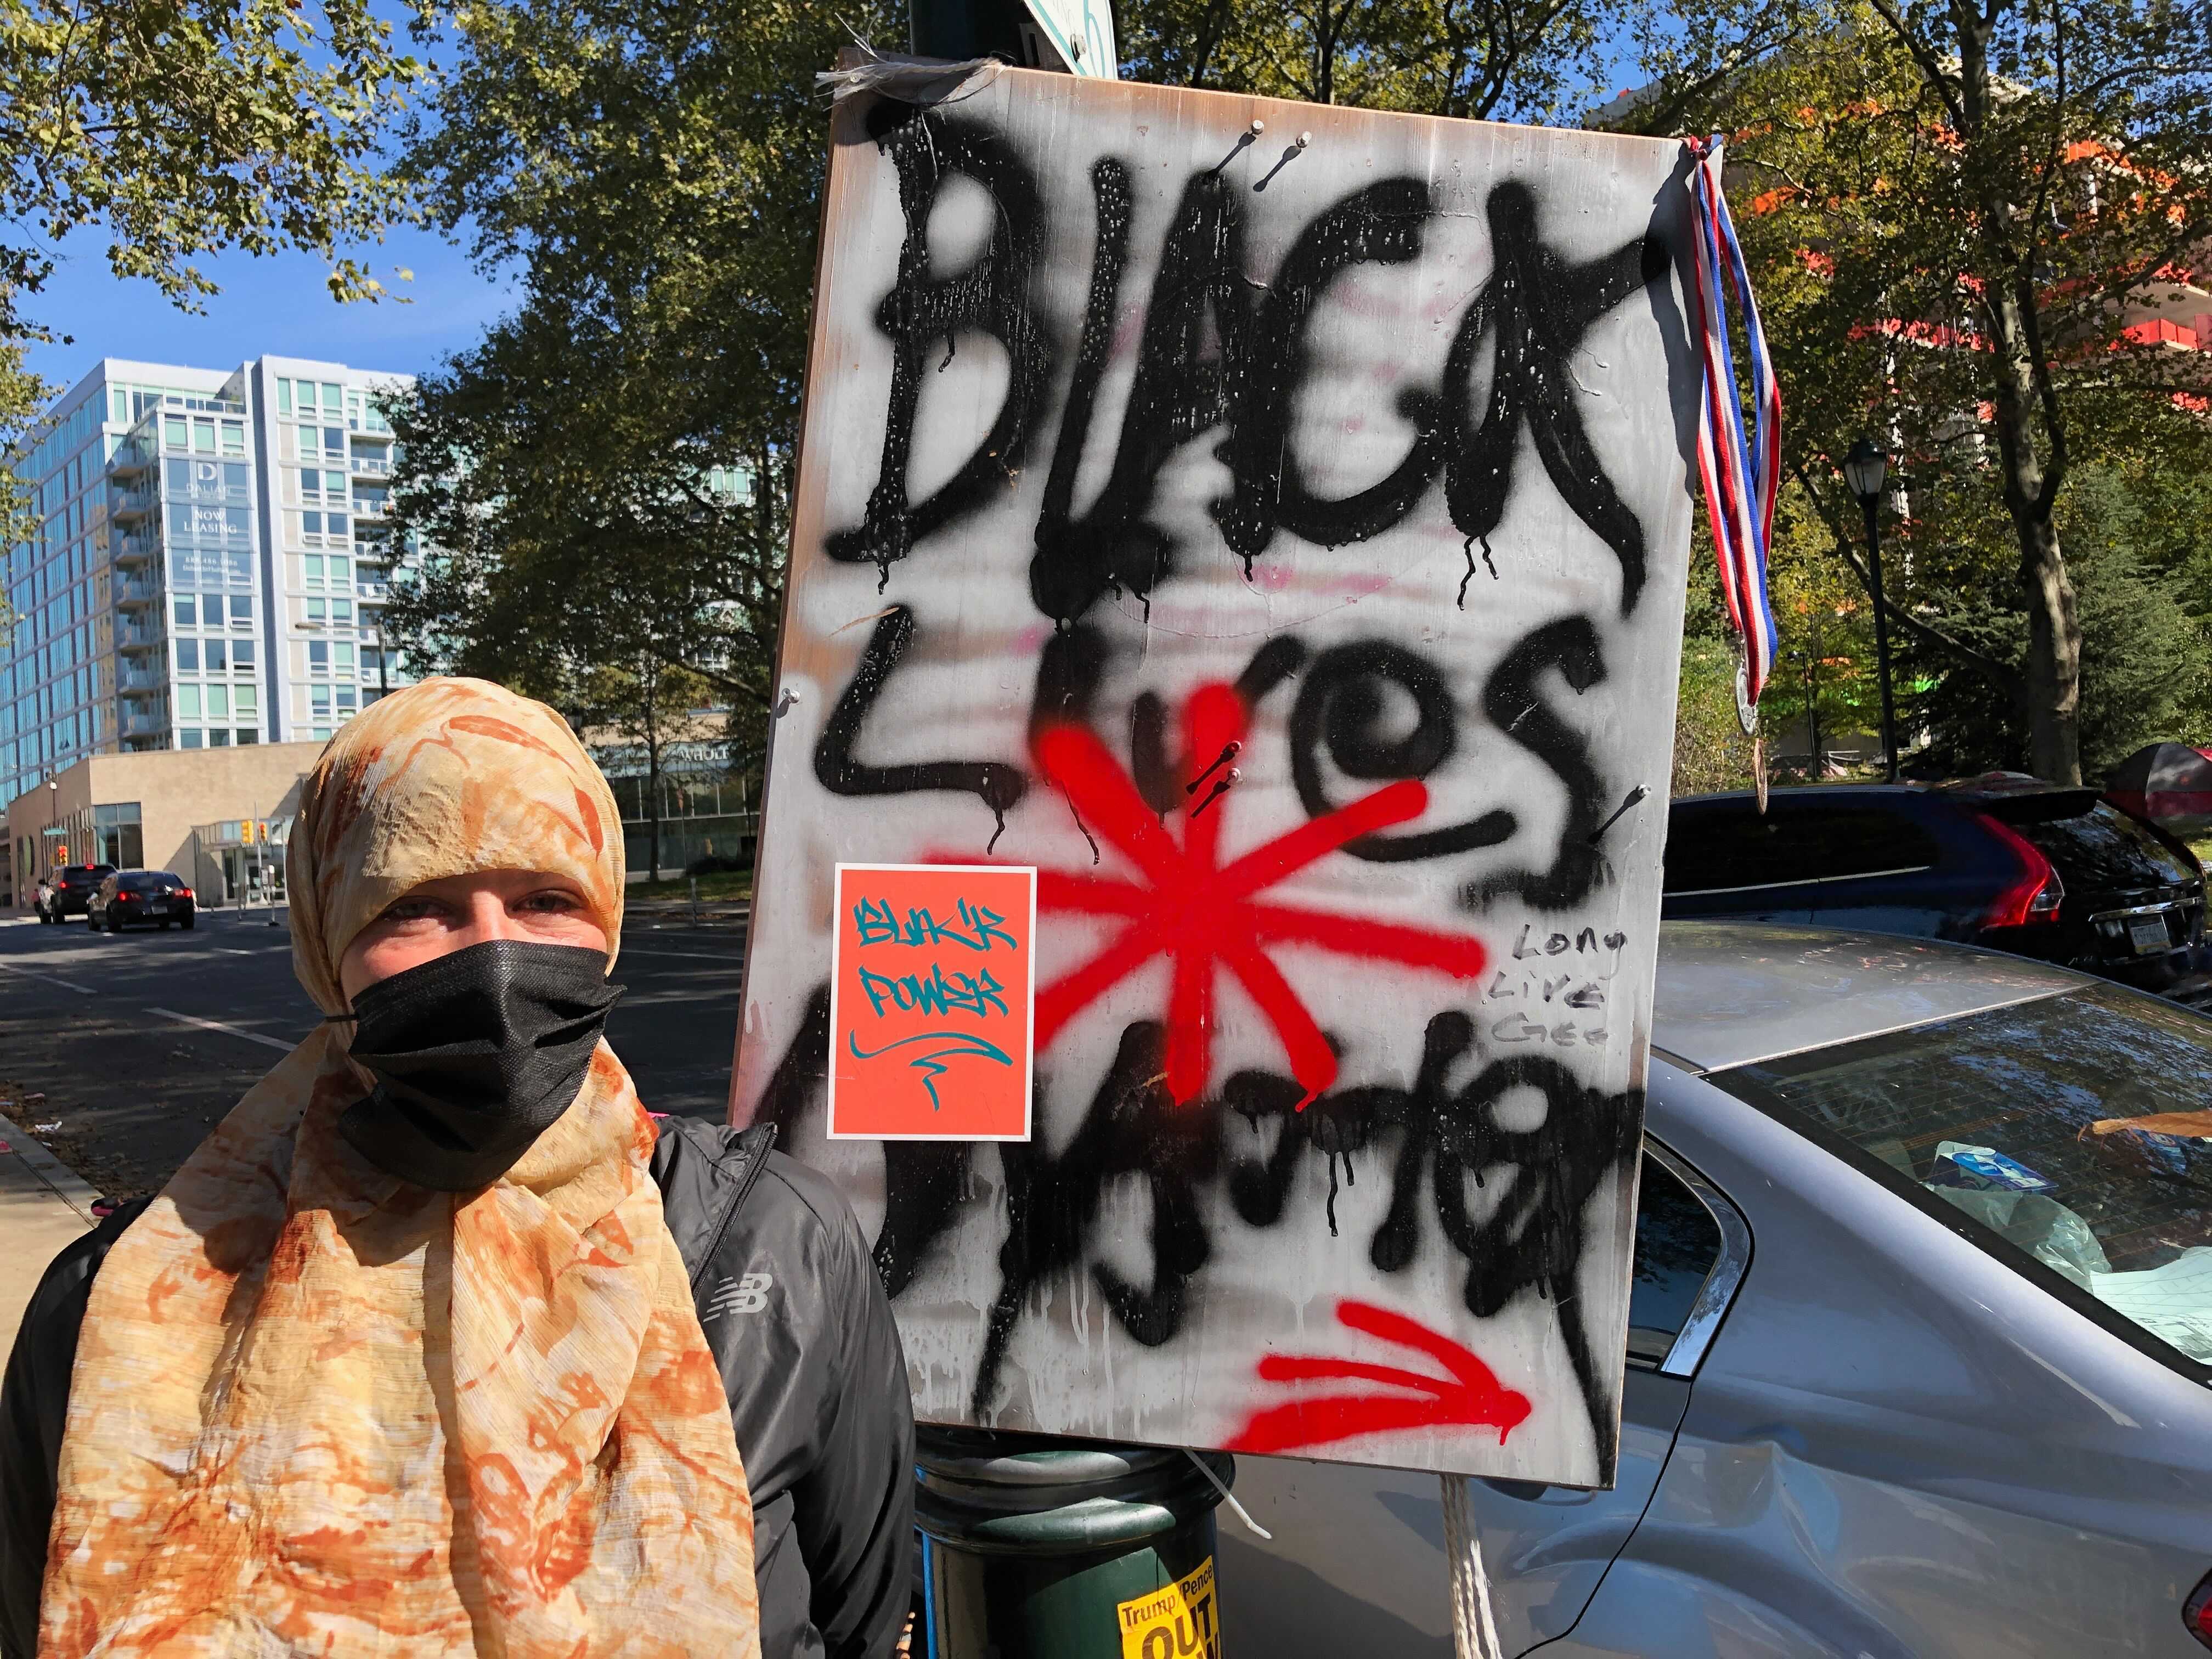 Housing activist Jenn Bennetch with Black Lives Matter sign